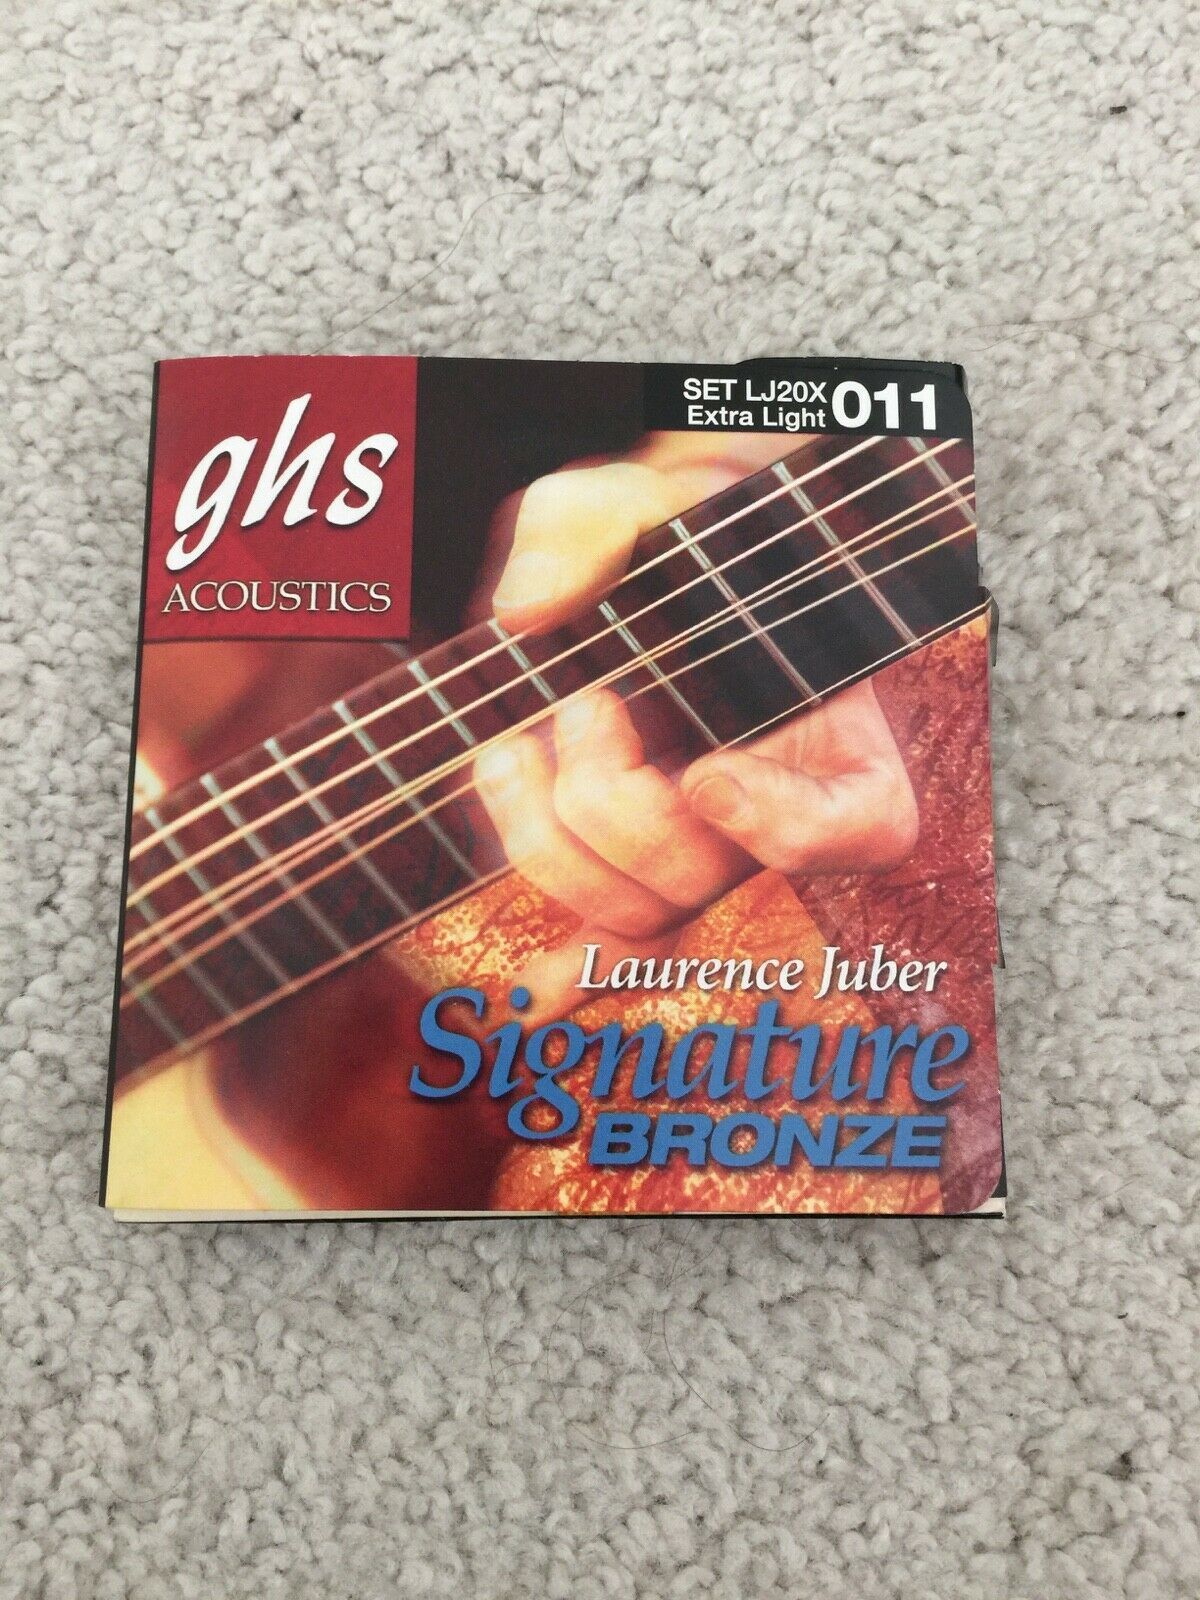 144 GHS Acoustics LJ20X Extra Light 011 Guitar Strings (6 strings in ea set) - $205.70